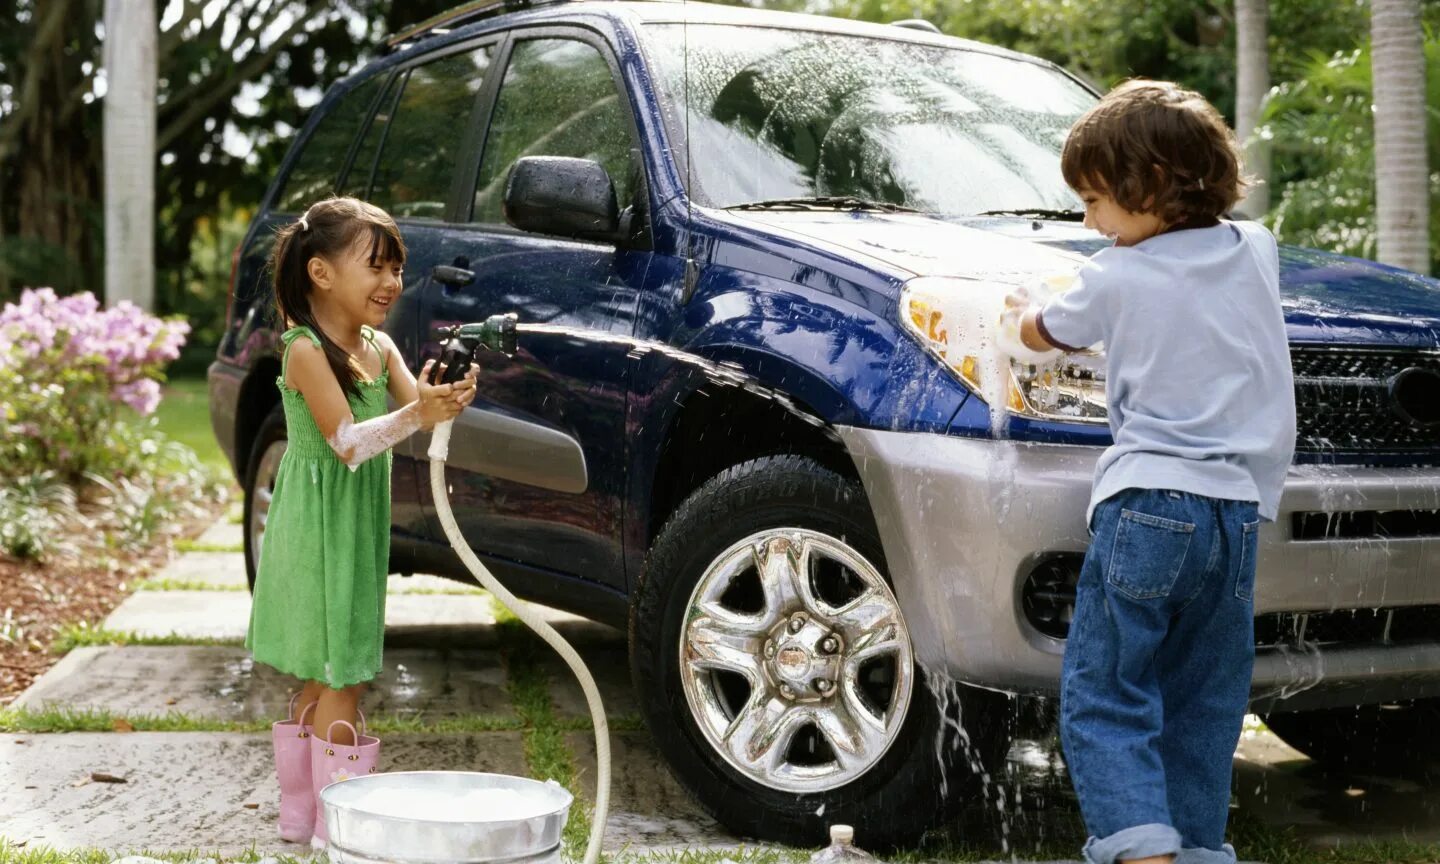 Мойка машины. Мойка машины на даче. Дети моют машину. Мойка машин детьми. He clean the car